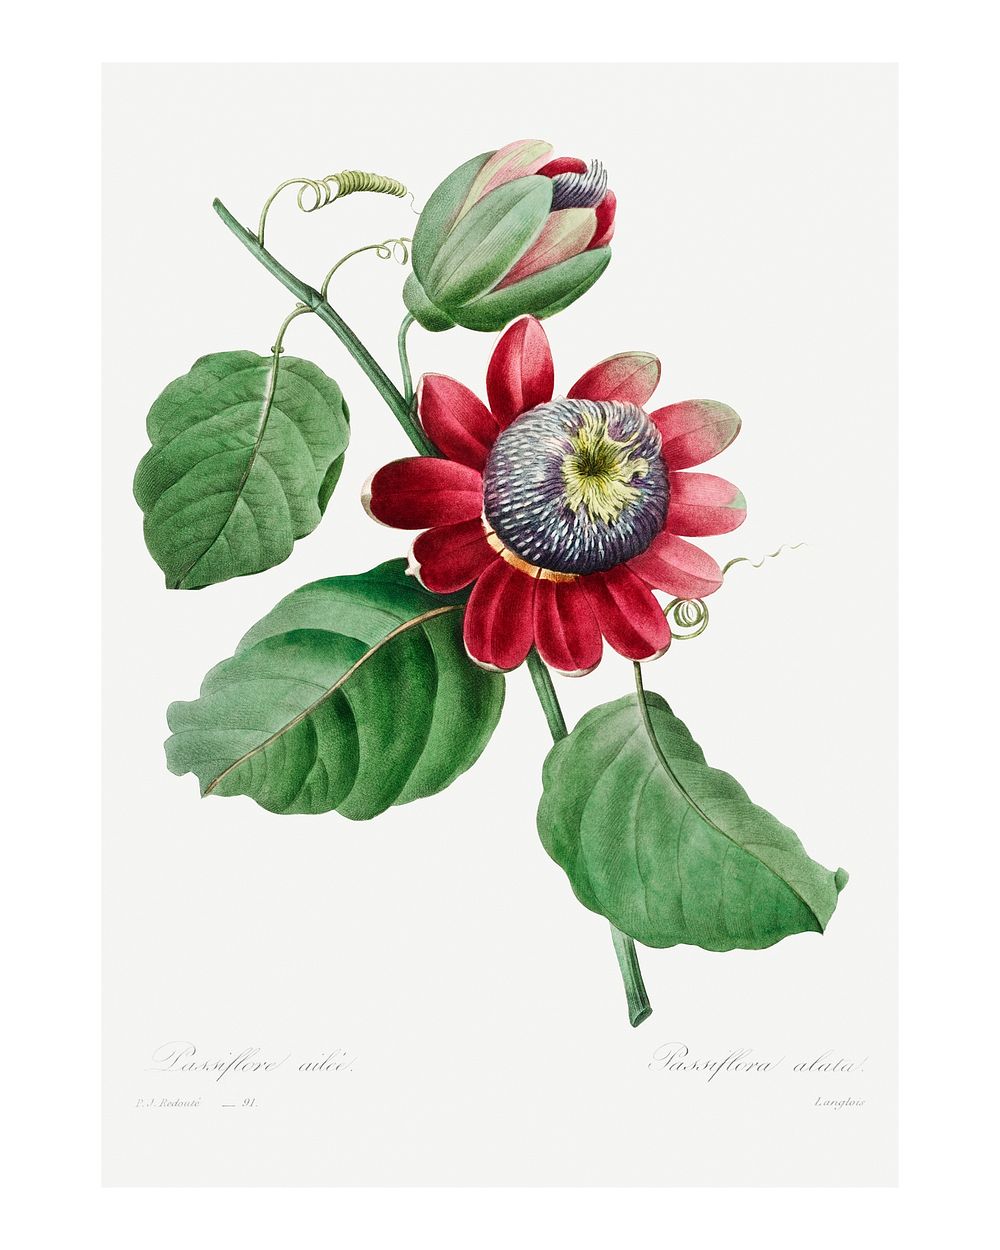 Winged-stem passion flower Pomegranate wall art print and poster. Original from Choix des plus belles fleurs plus beaux…